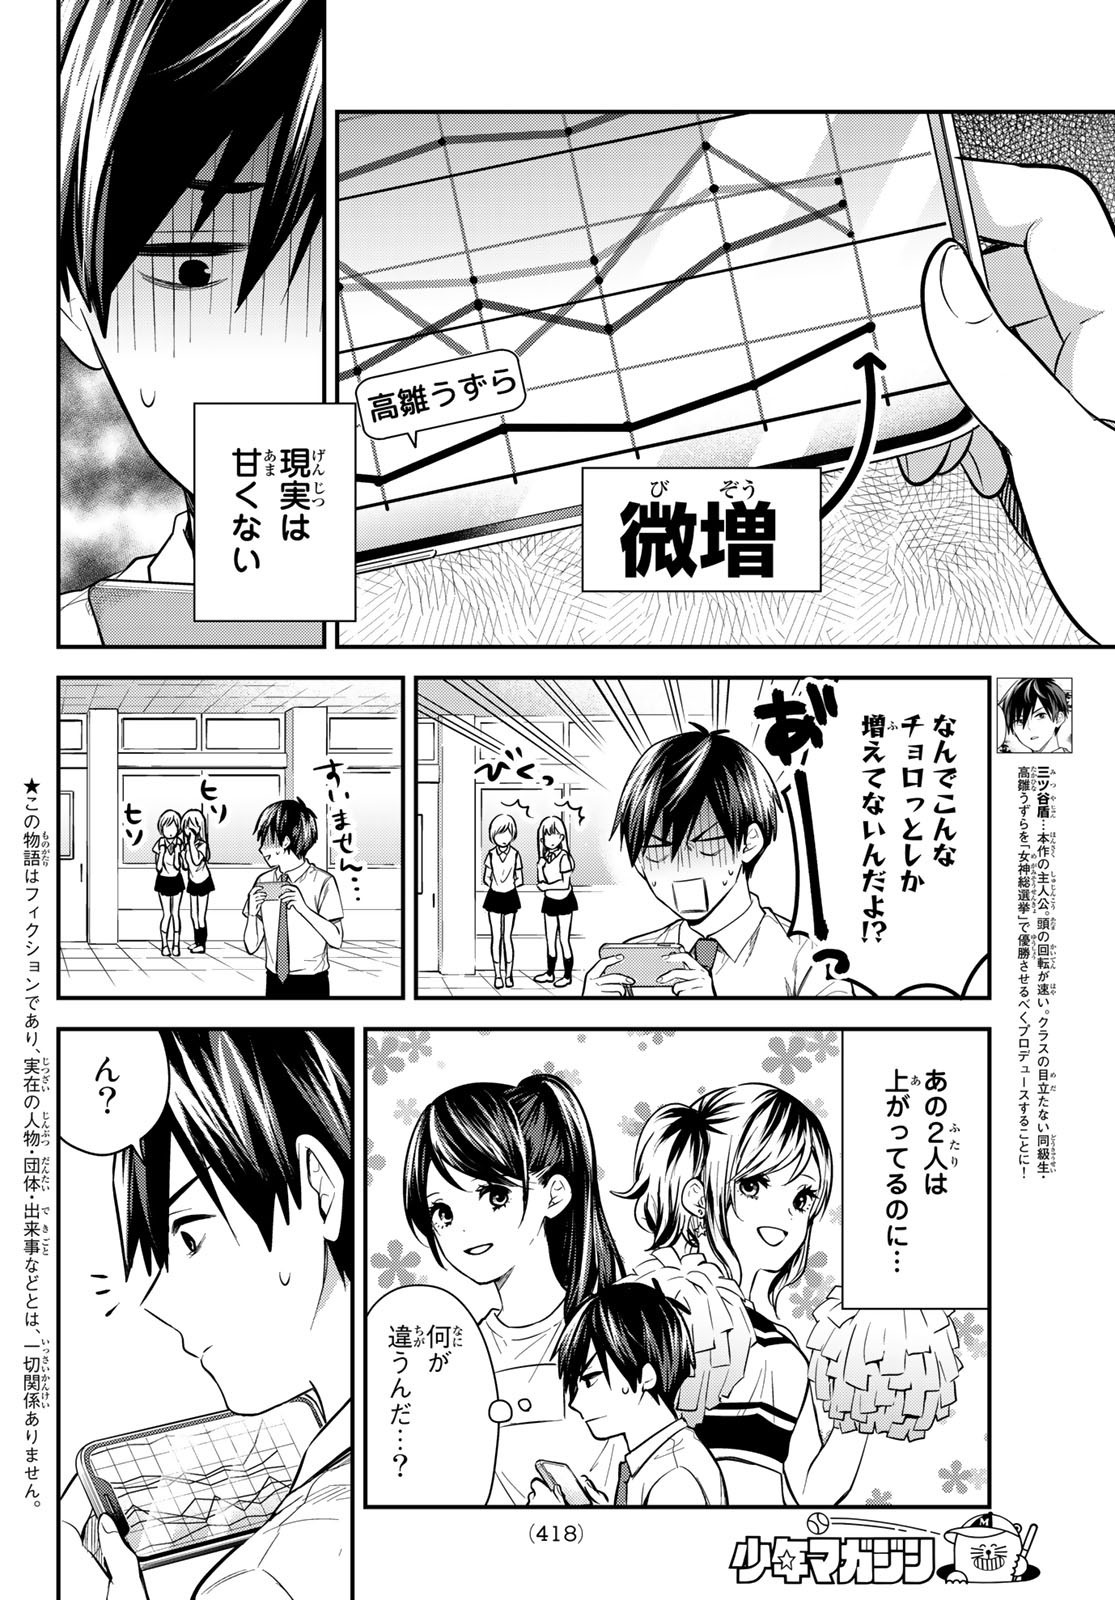 Kimi ga Megami Nara Ii no ni (I Wish You Were My Muse) - Chapter 019 - Page 2